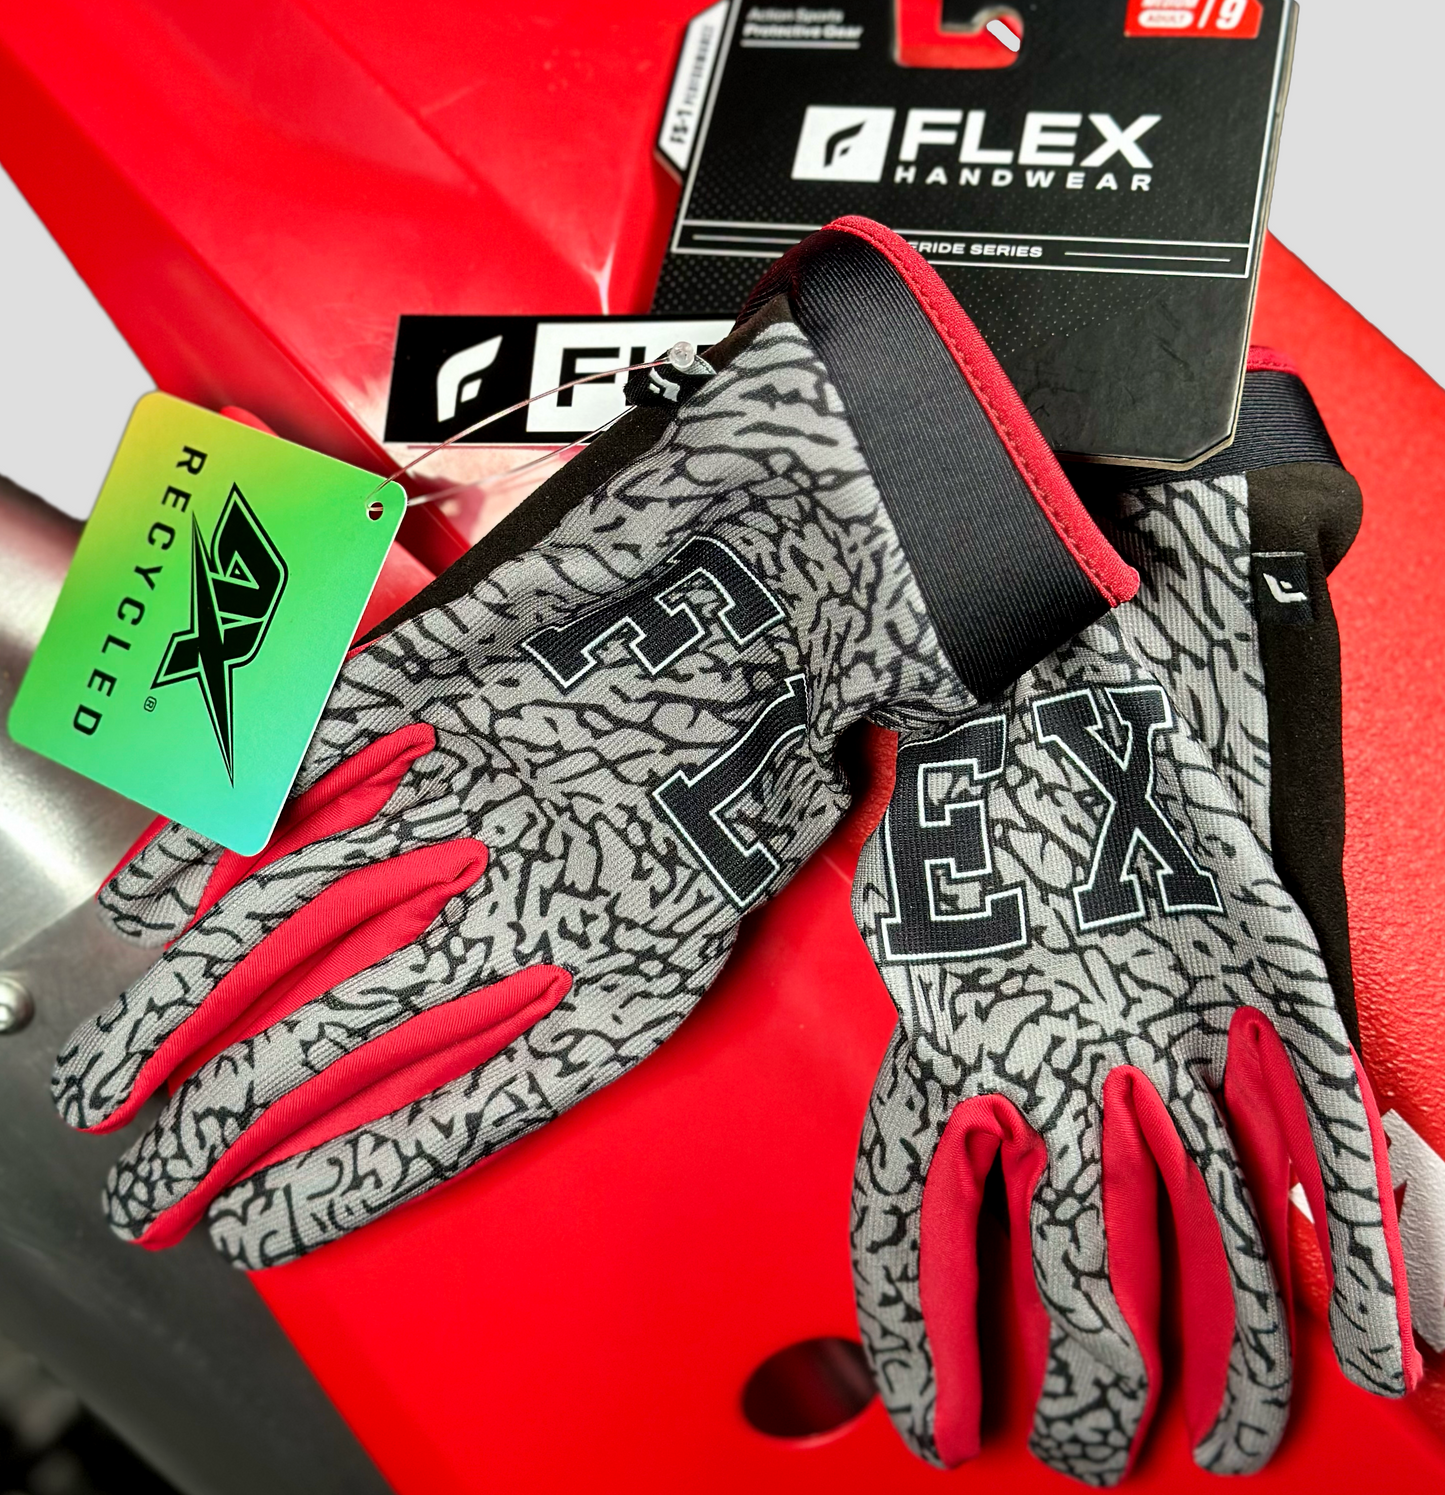 FS-1™ Performance Glove - Elephant Hide/ Red